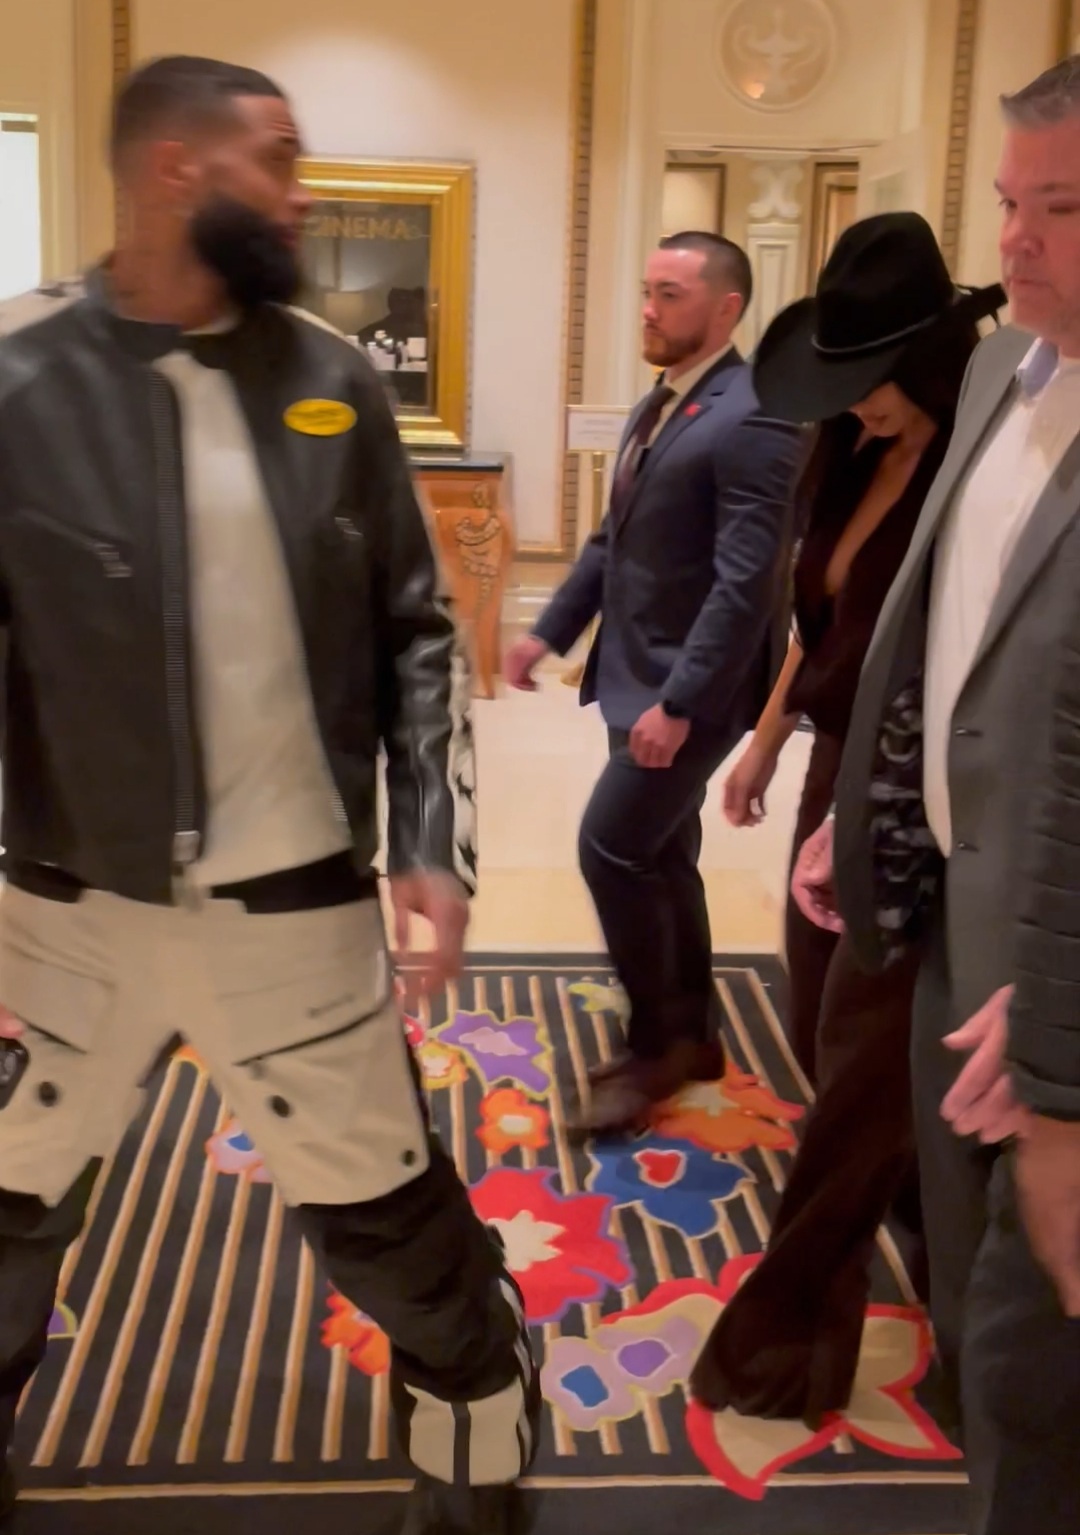 Kim tried to quietly sneak into a Vegas party